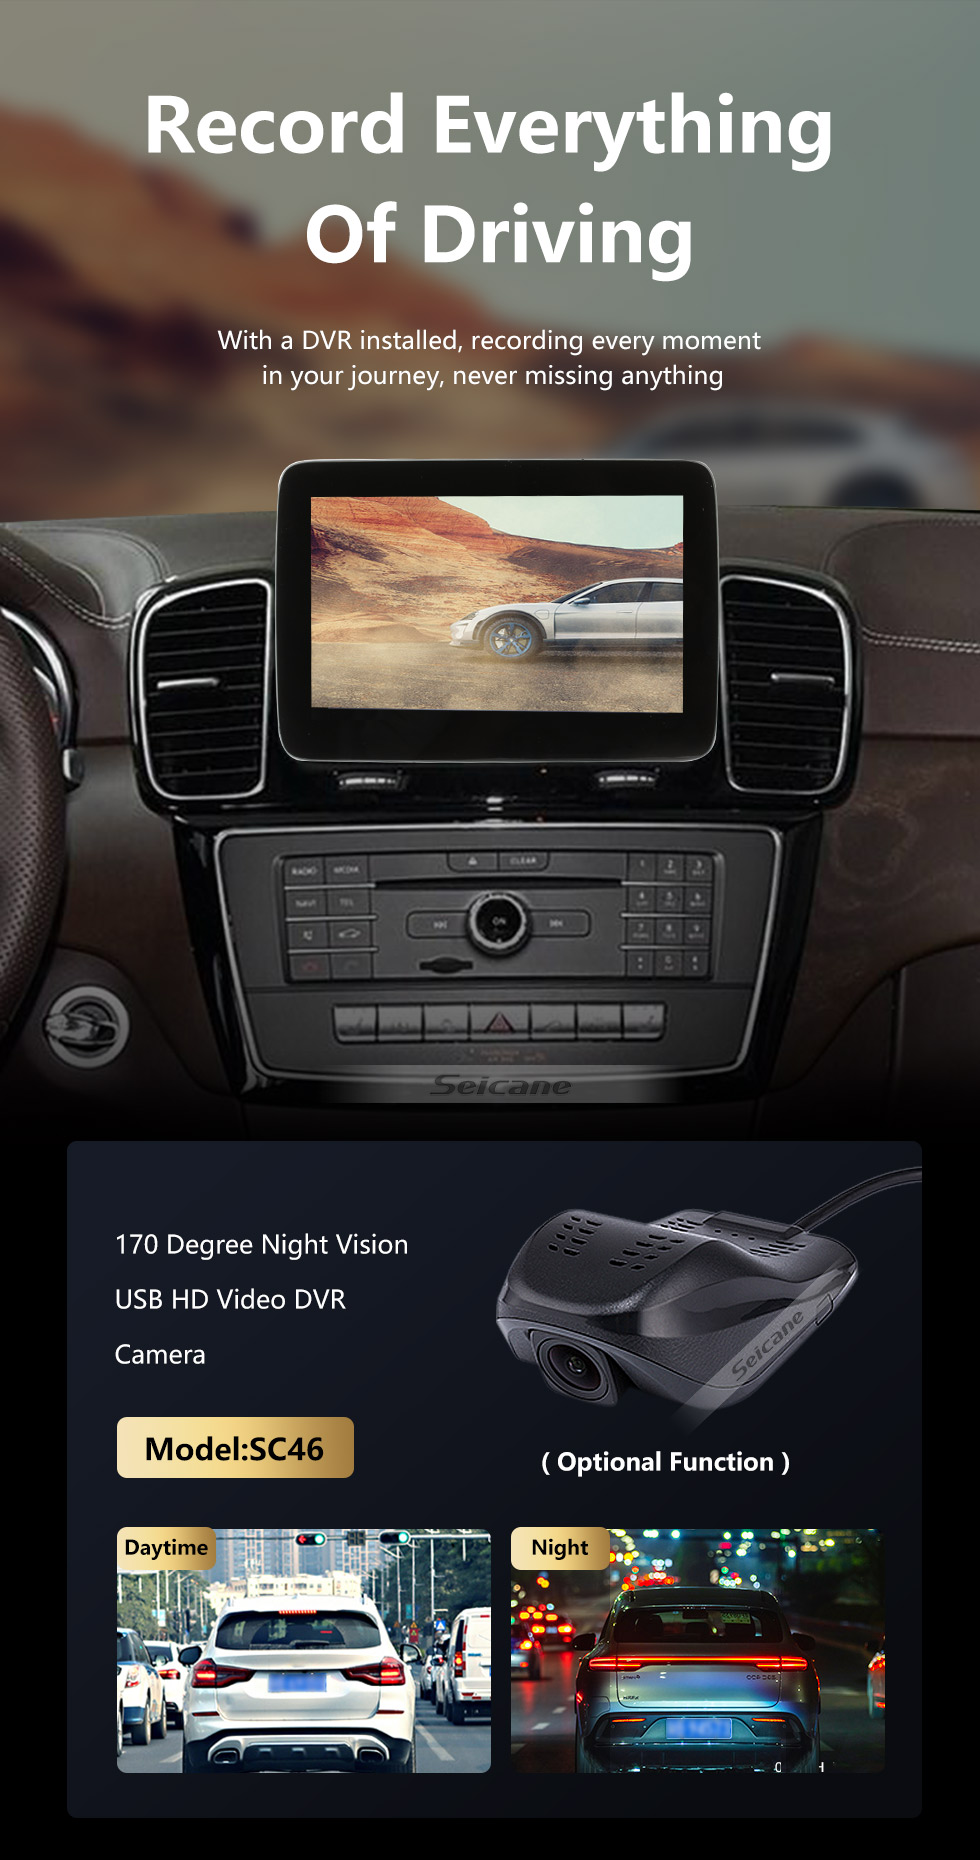 Seicane Carplay 9-дюймовый Android 10.0 для 2015 2016 2017 2018 Mercedes GLE NTG5.0 Стерео GPS-навигационная система с Bluetooth Android Auto поддержка сети 4G